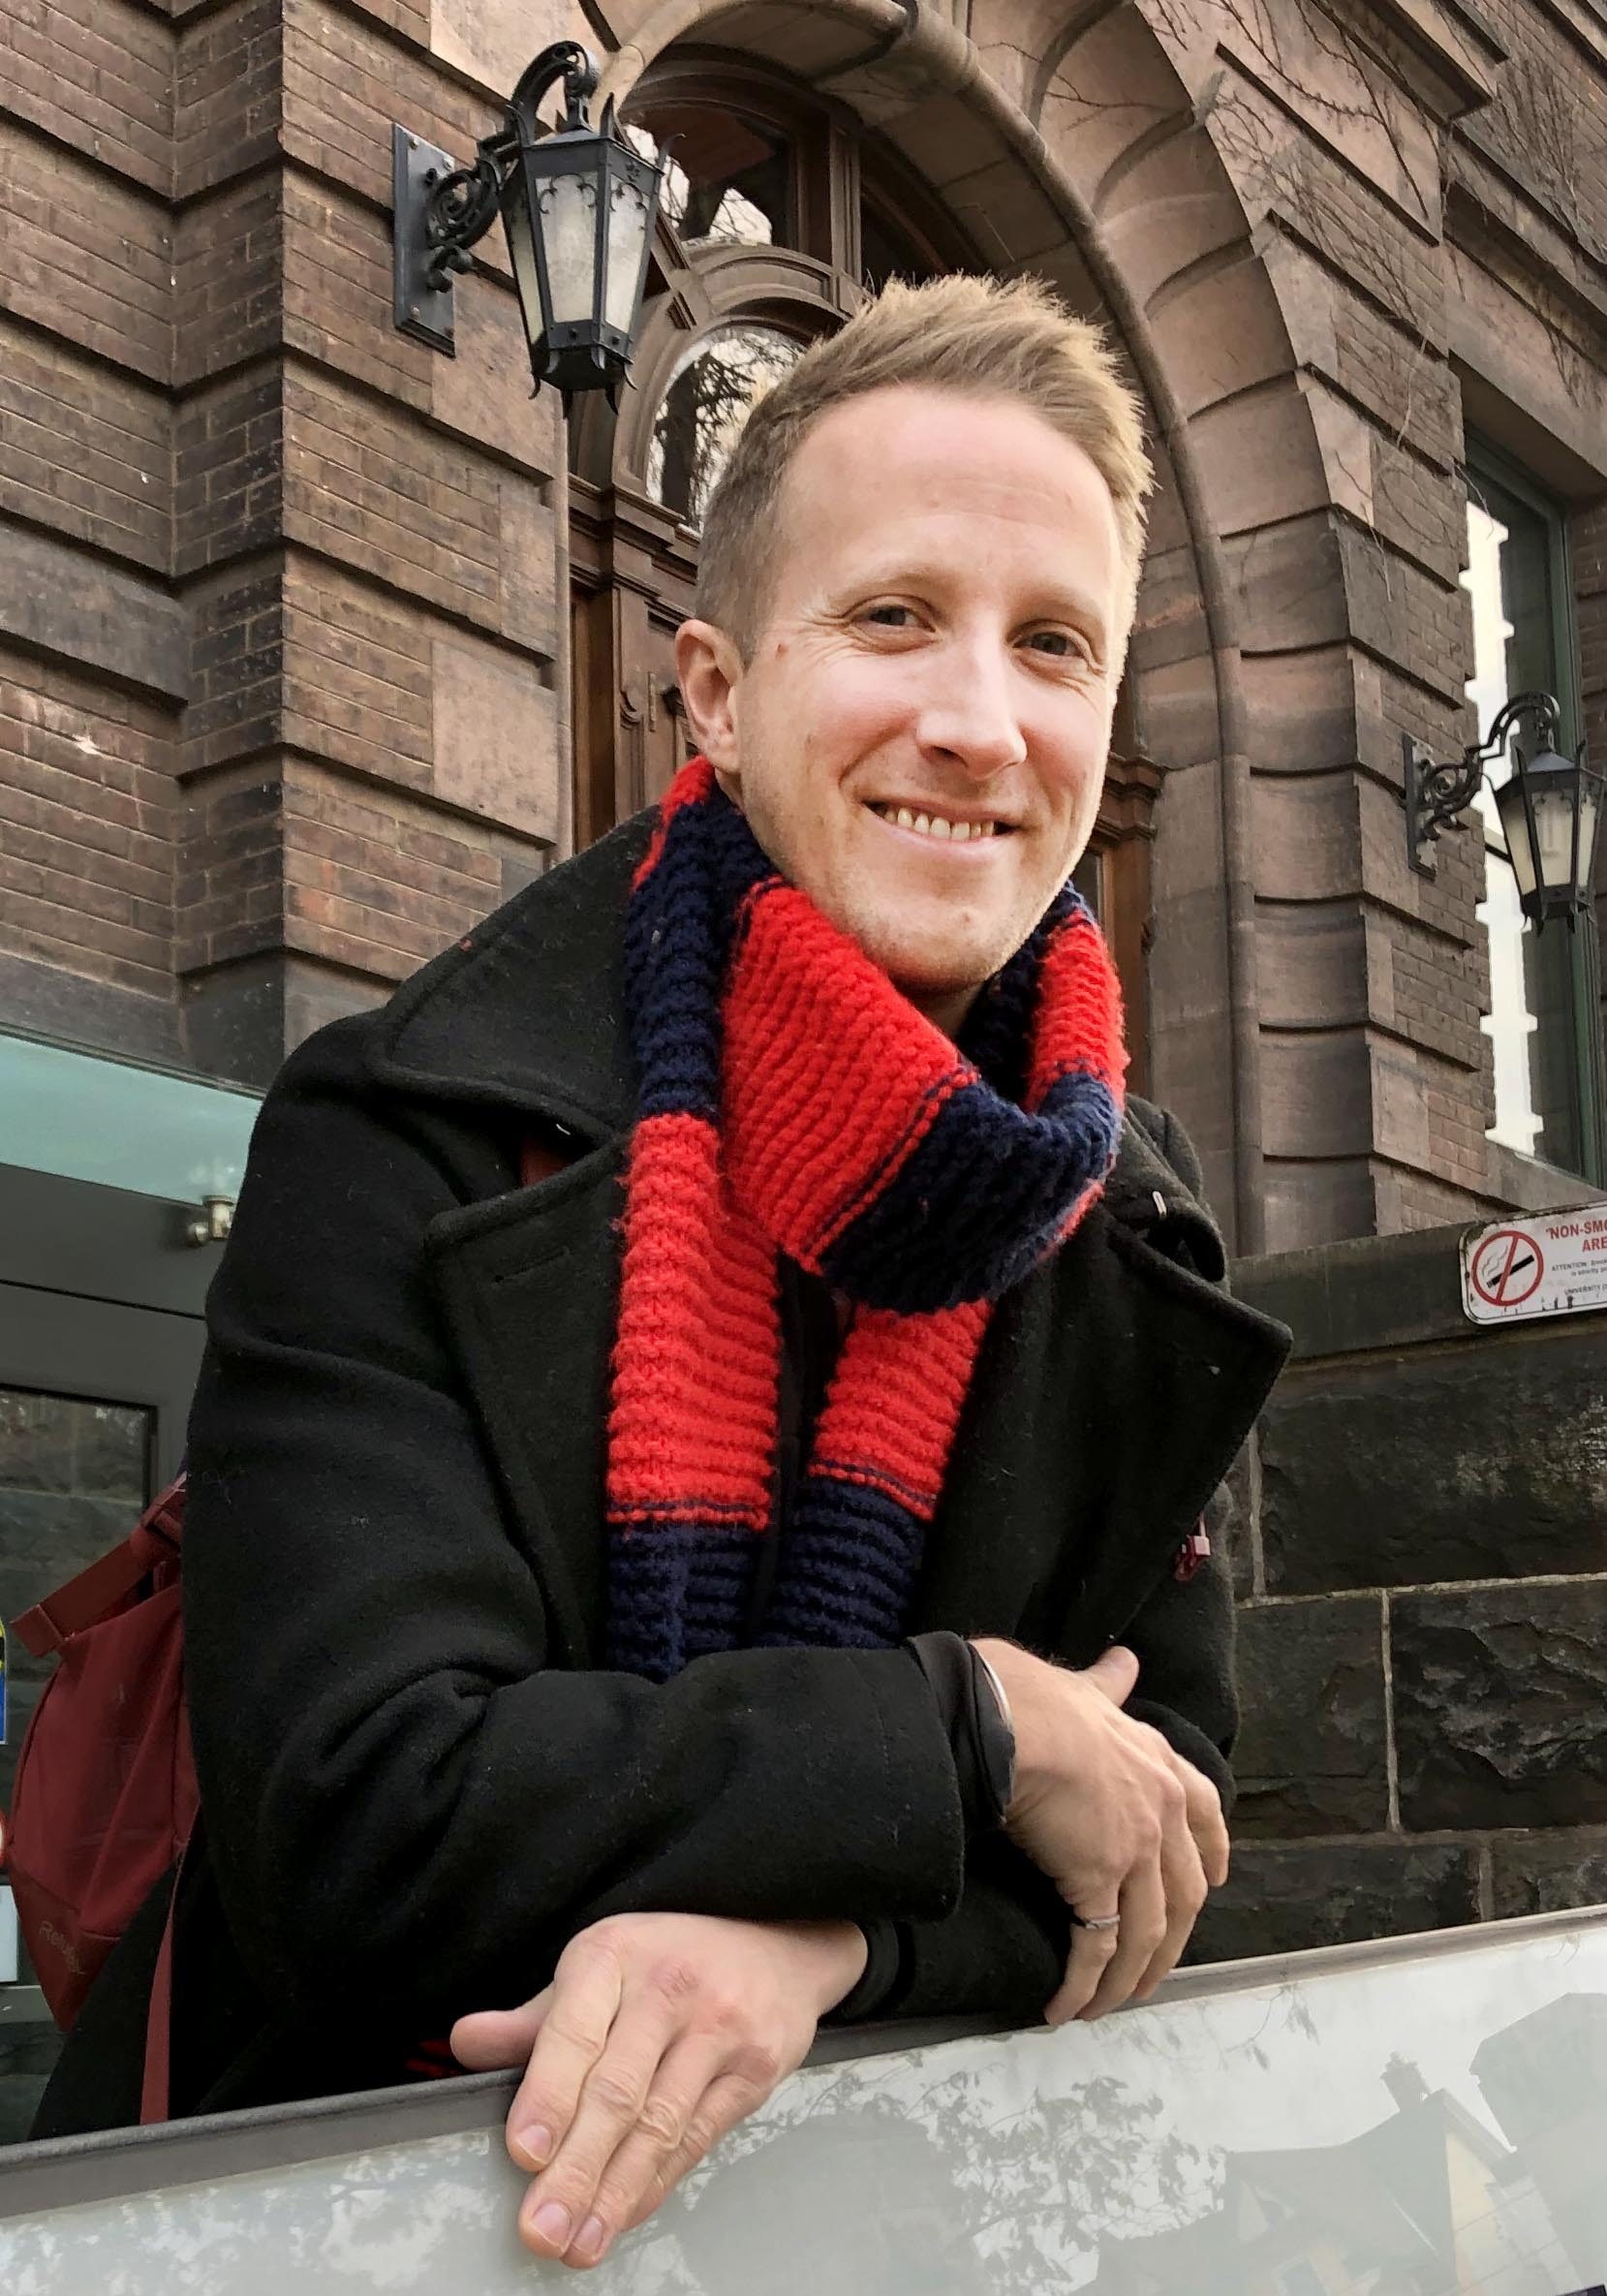  Sebastian Goodfellow outdoors in a scarf